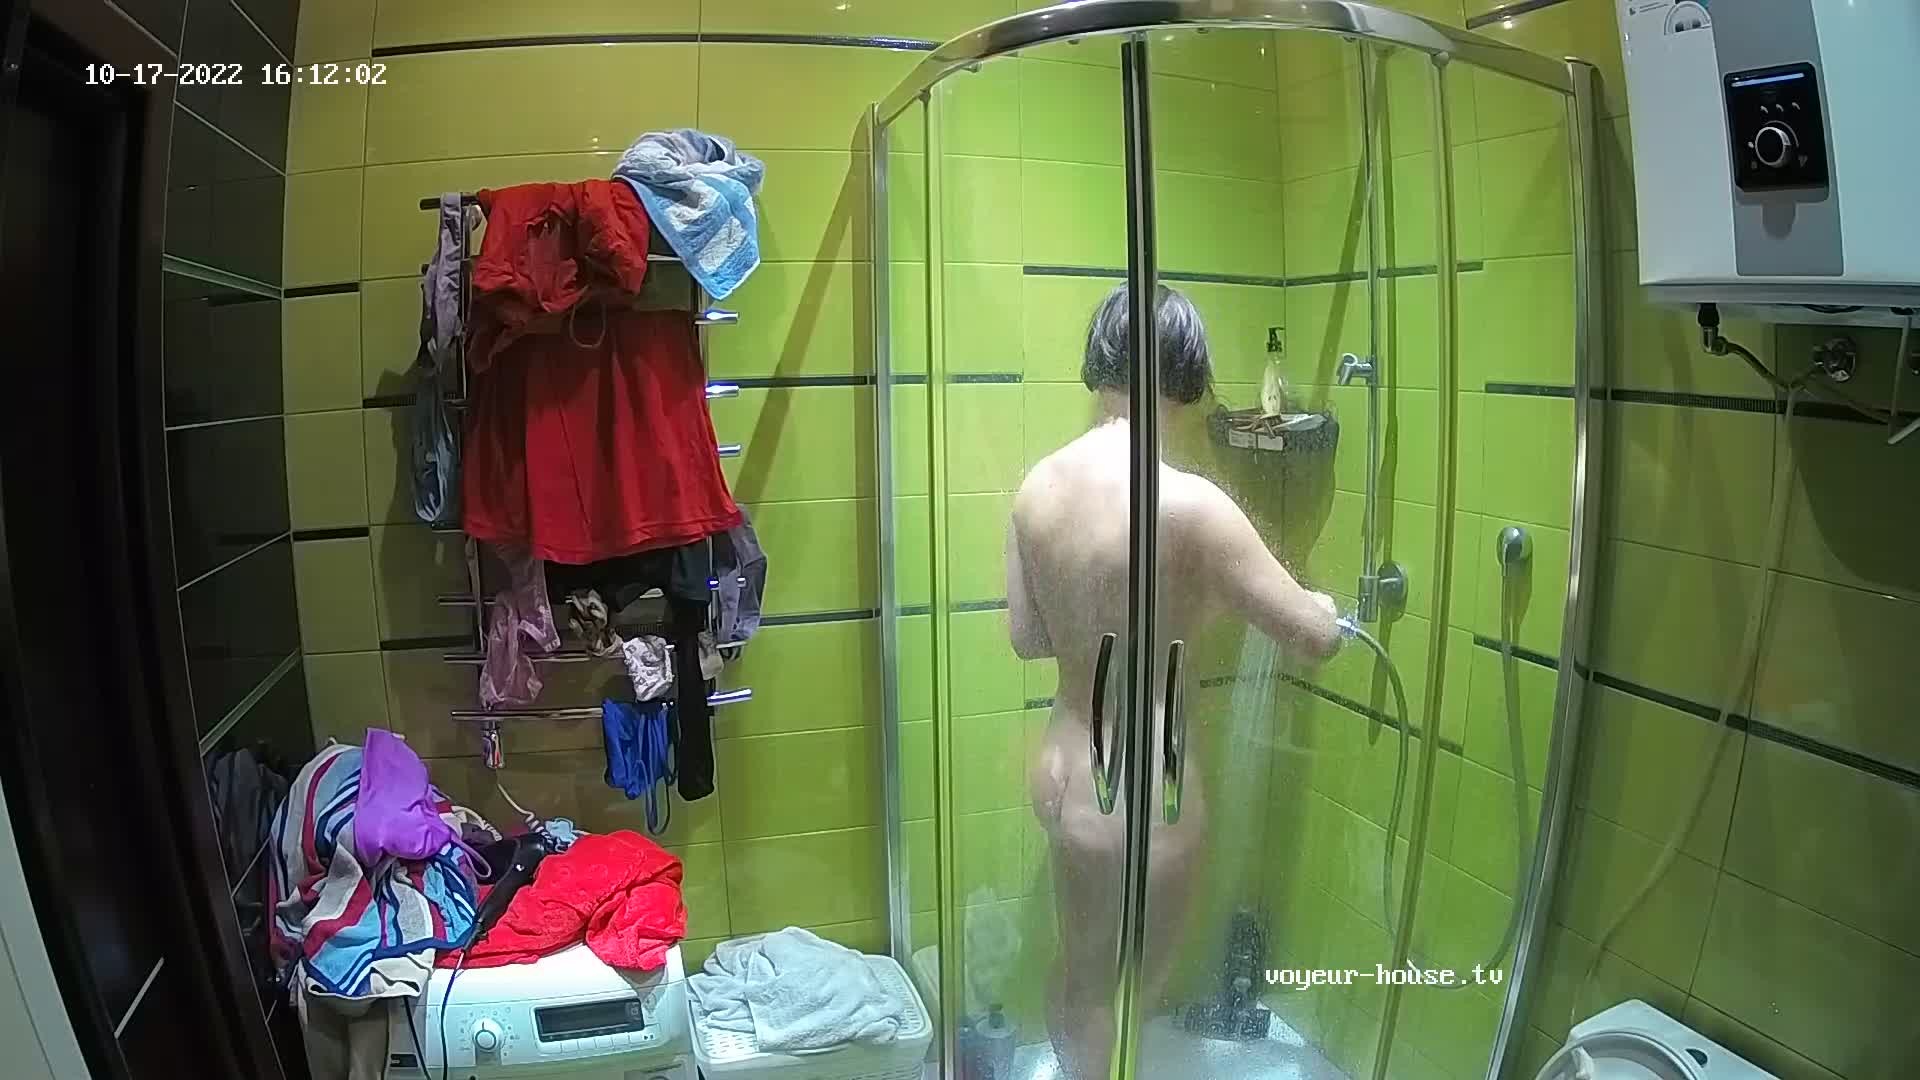 Evelyn shower after sex, Oct17/22